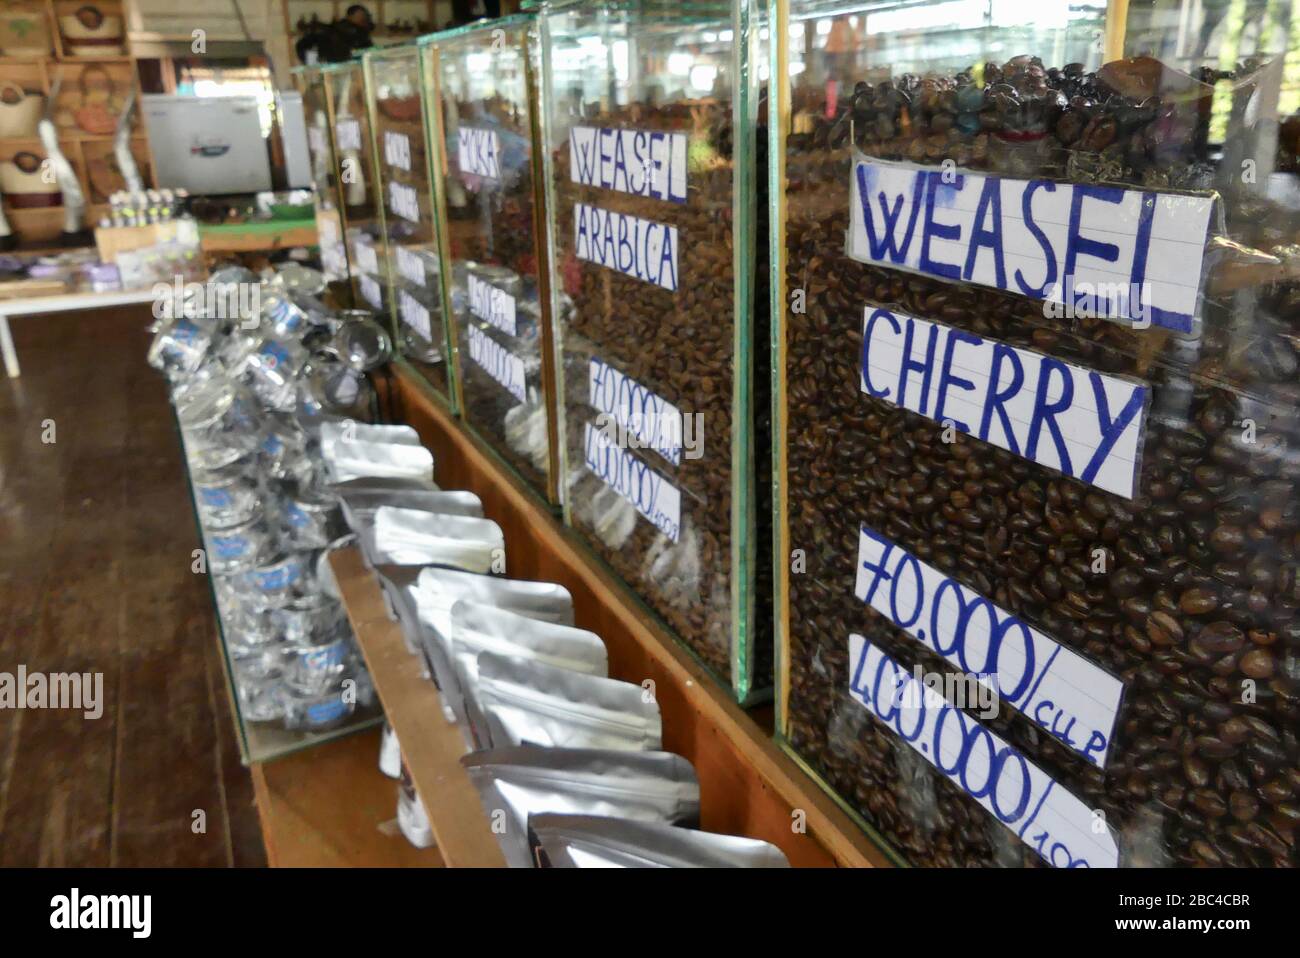 Weasel Faeces Cherry Coffee on sale in a shop in Da Lat, Vietnam Stock Photo